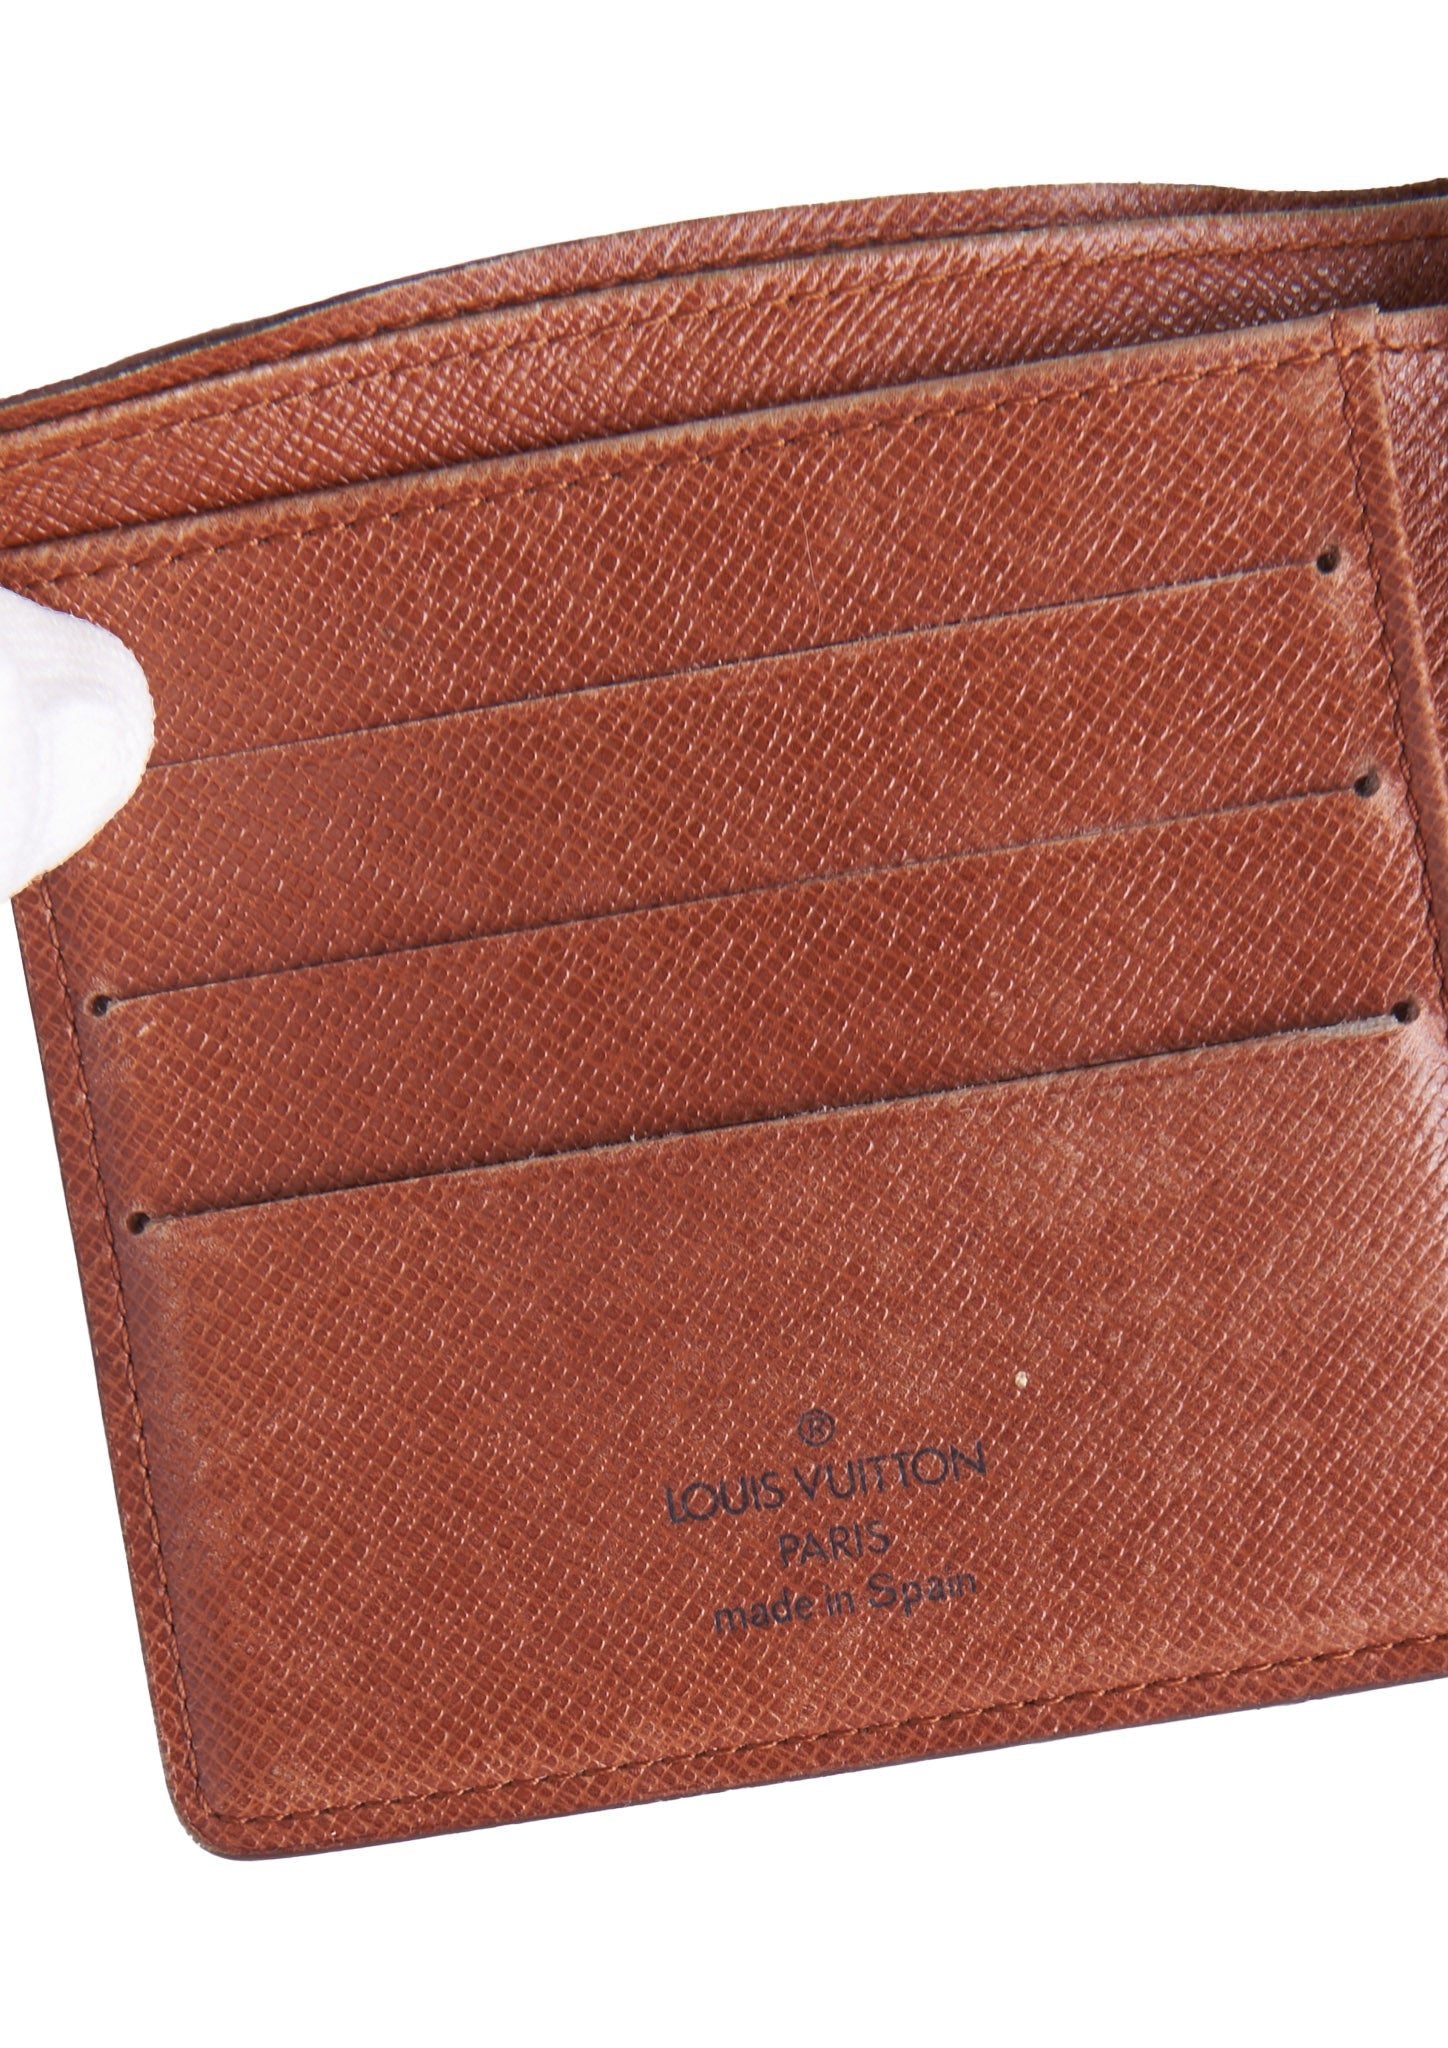 Bags  1993 Authentic Louis Vuitton Mens Billfold Wallet Monogram